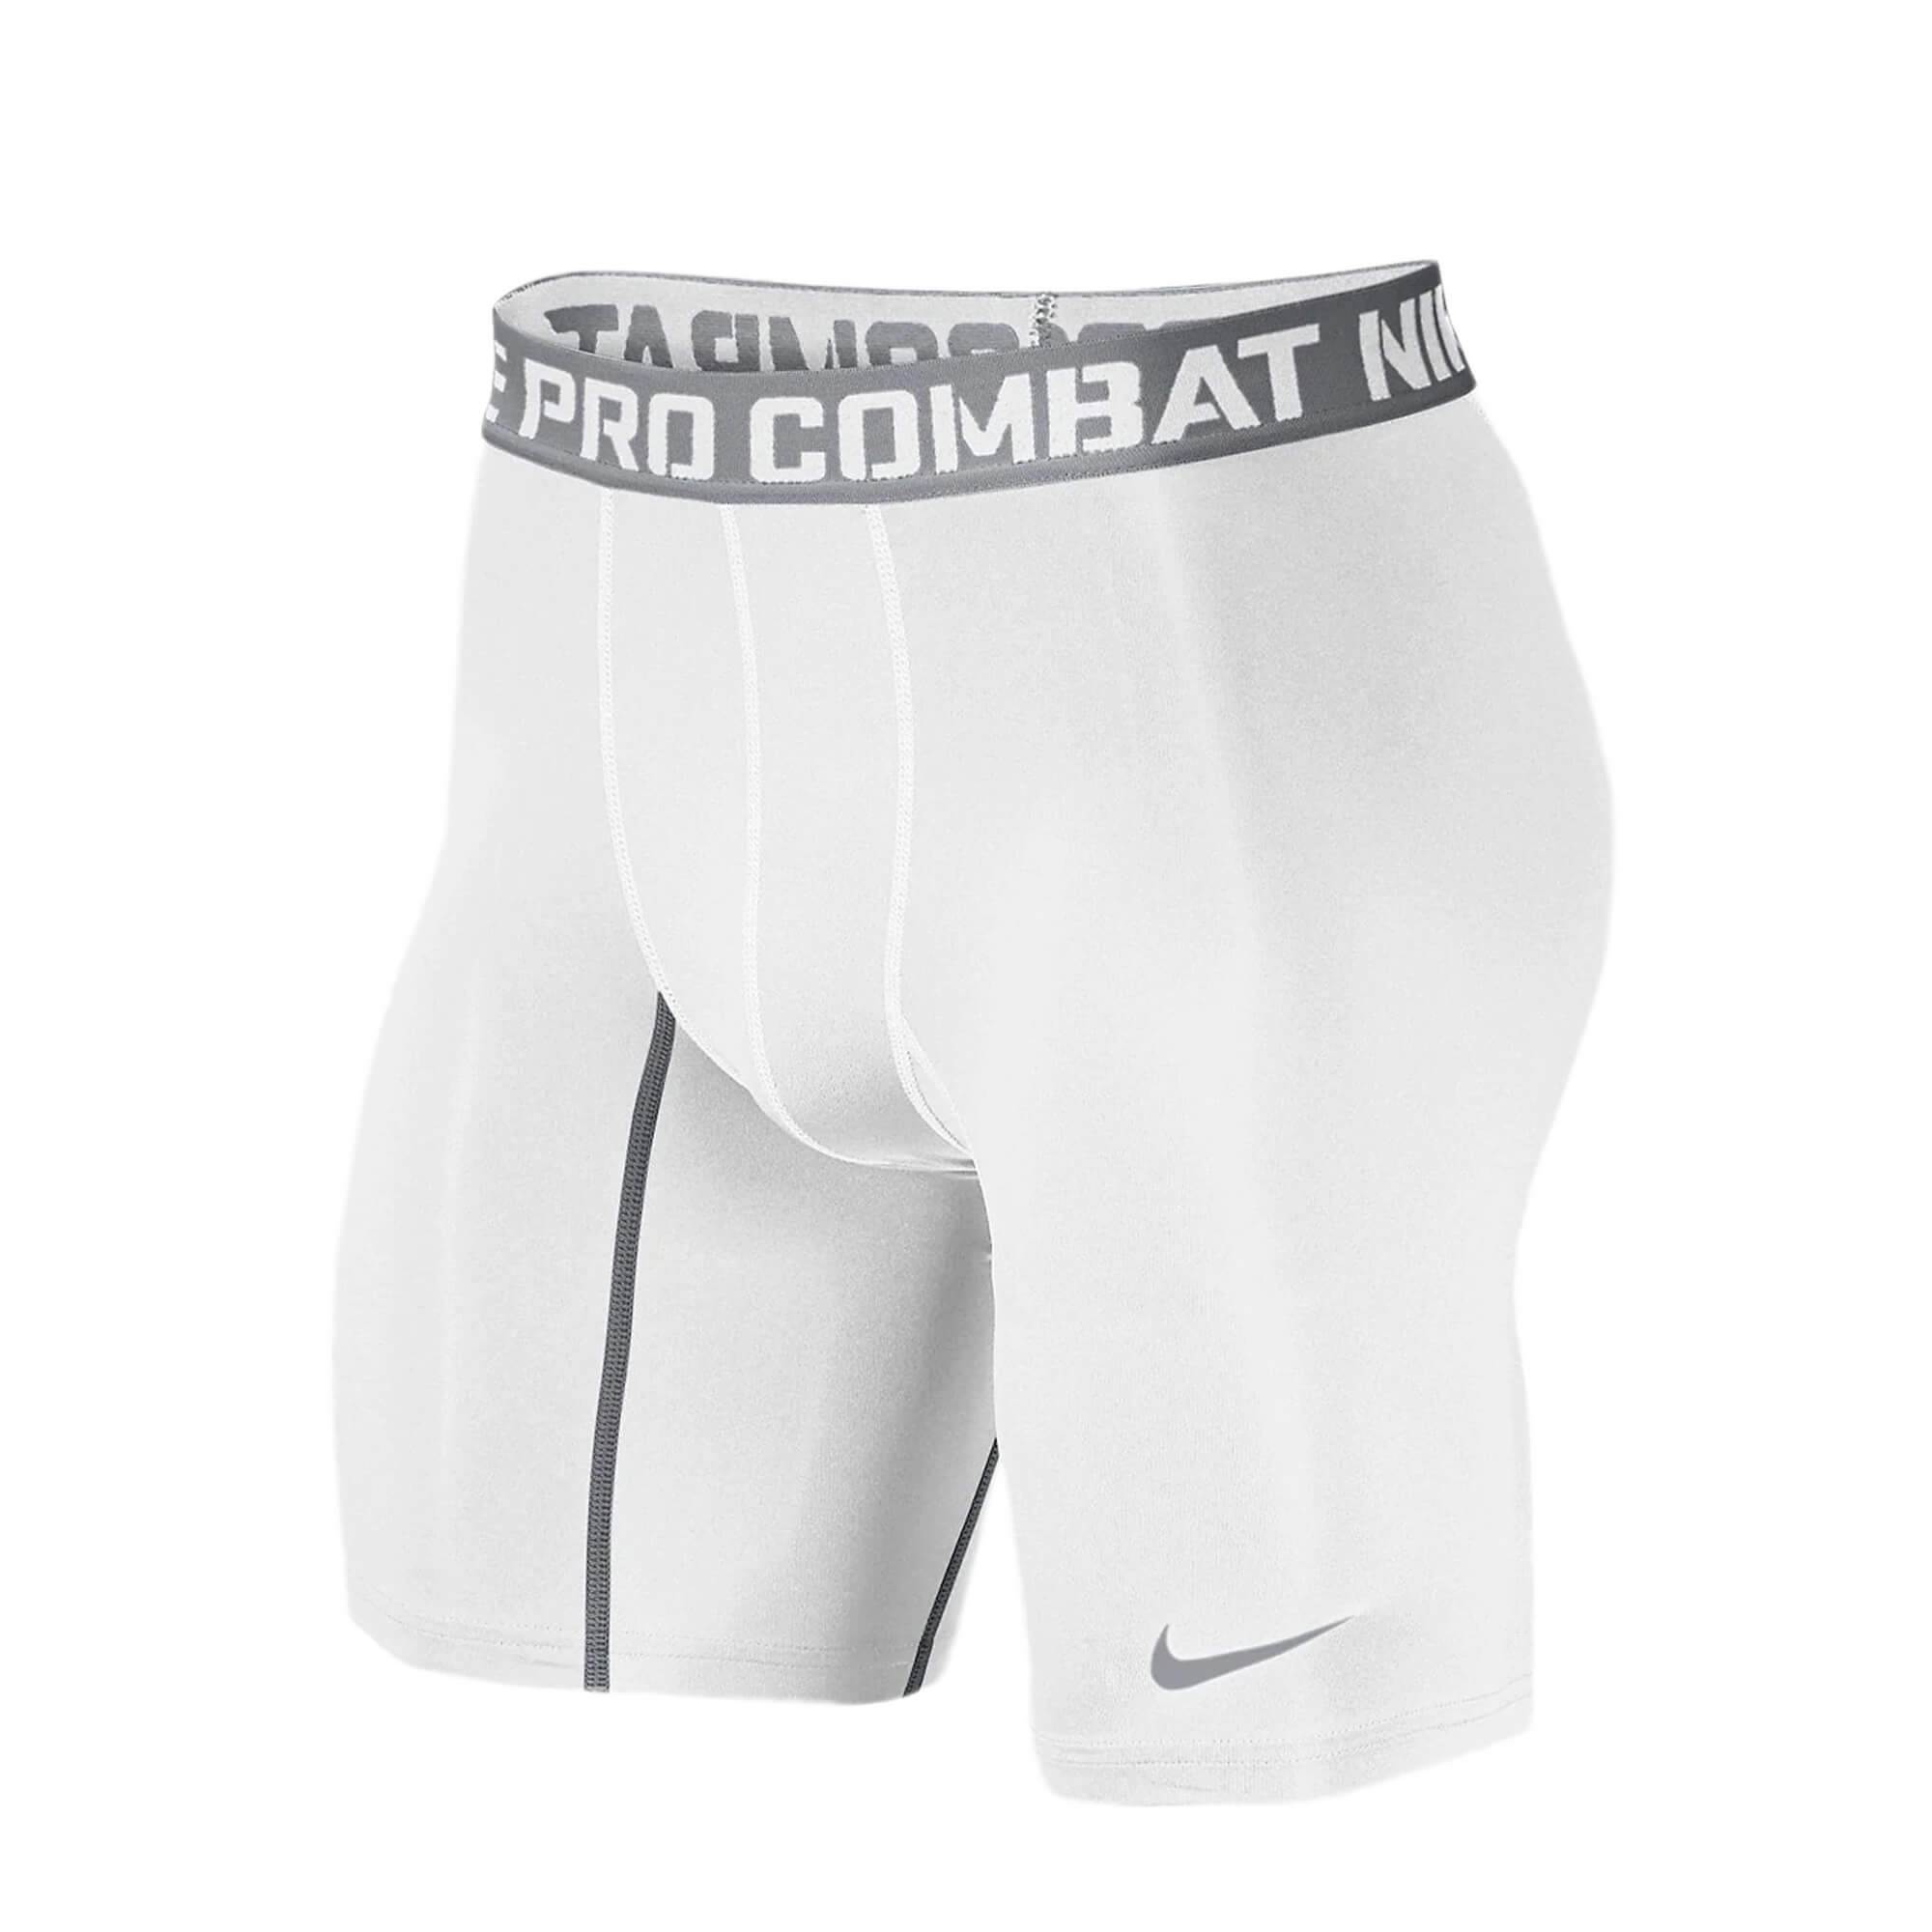 Nike Pro Compression N/S - White/Black